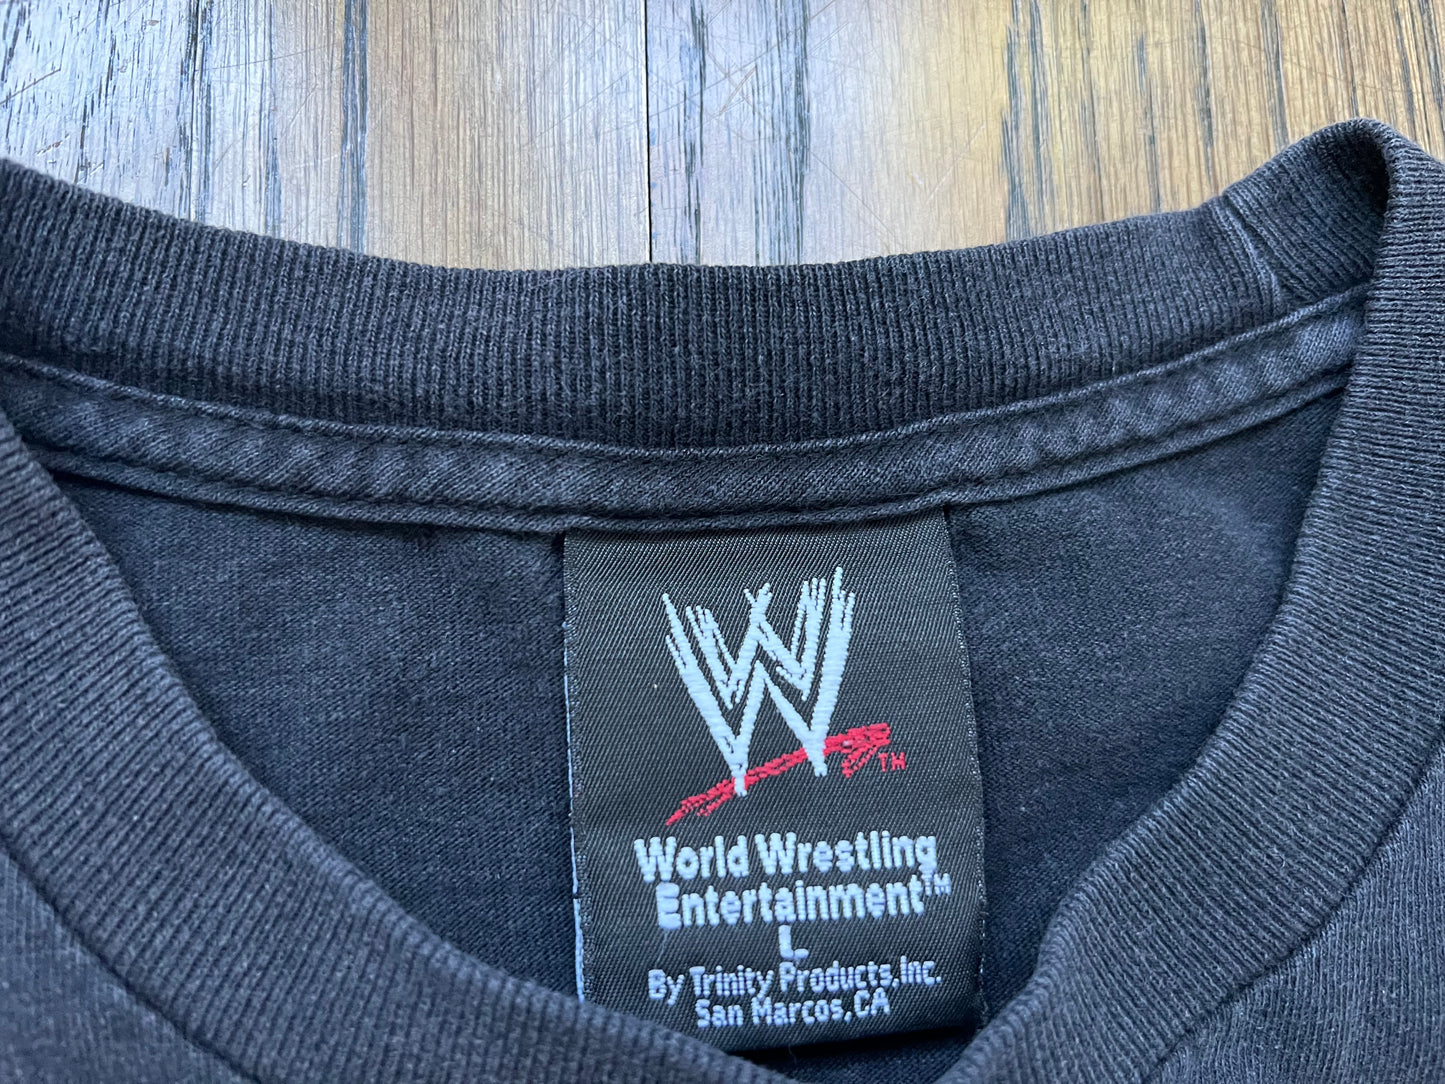 2003 WWE Backlash shirt featuring “The Doctor of Thuganomics” John Cena, “The Next Bog Thing” Brock Lesnar, Goldberg and The Rock